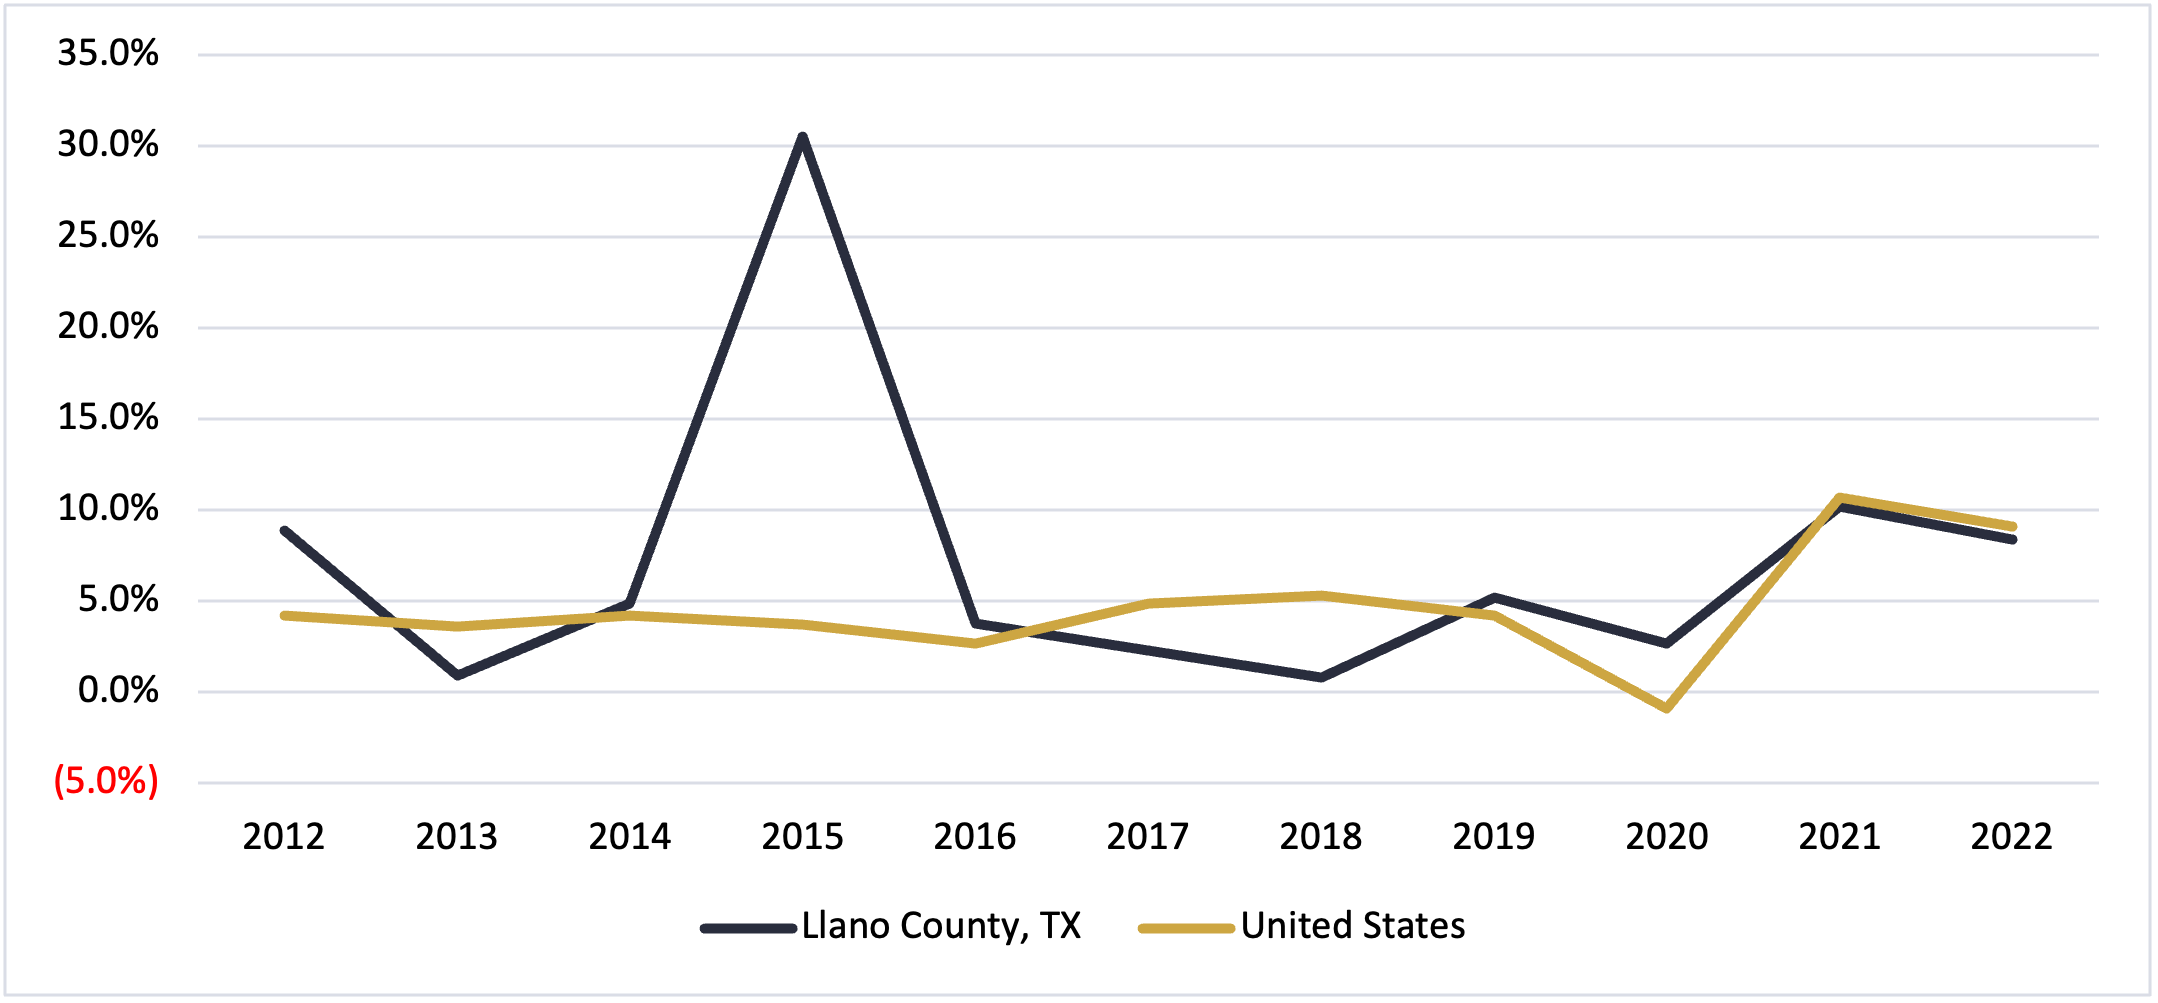 Llano County Texas GRP Growth 2022